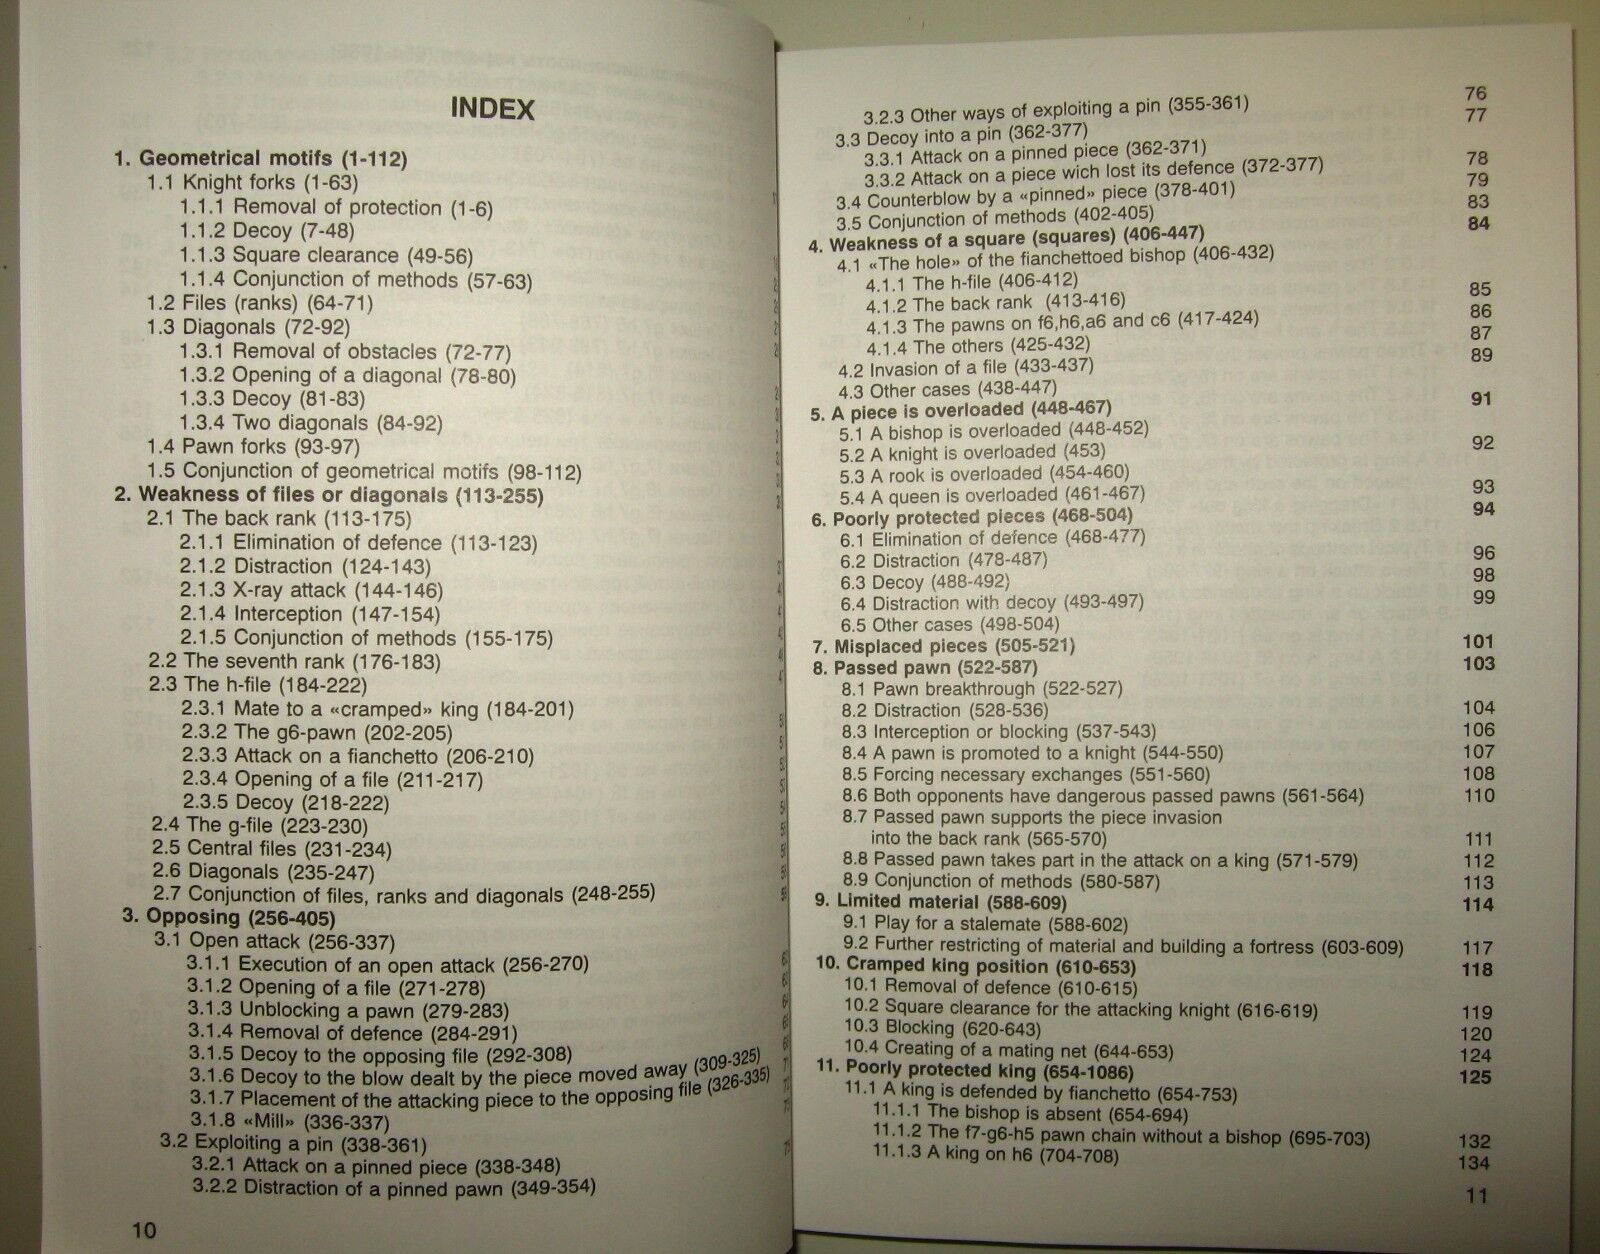 11093.Chess Book: Maxim Blokh. Combinative motifs. Moscow. 2012